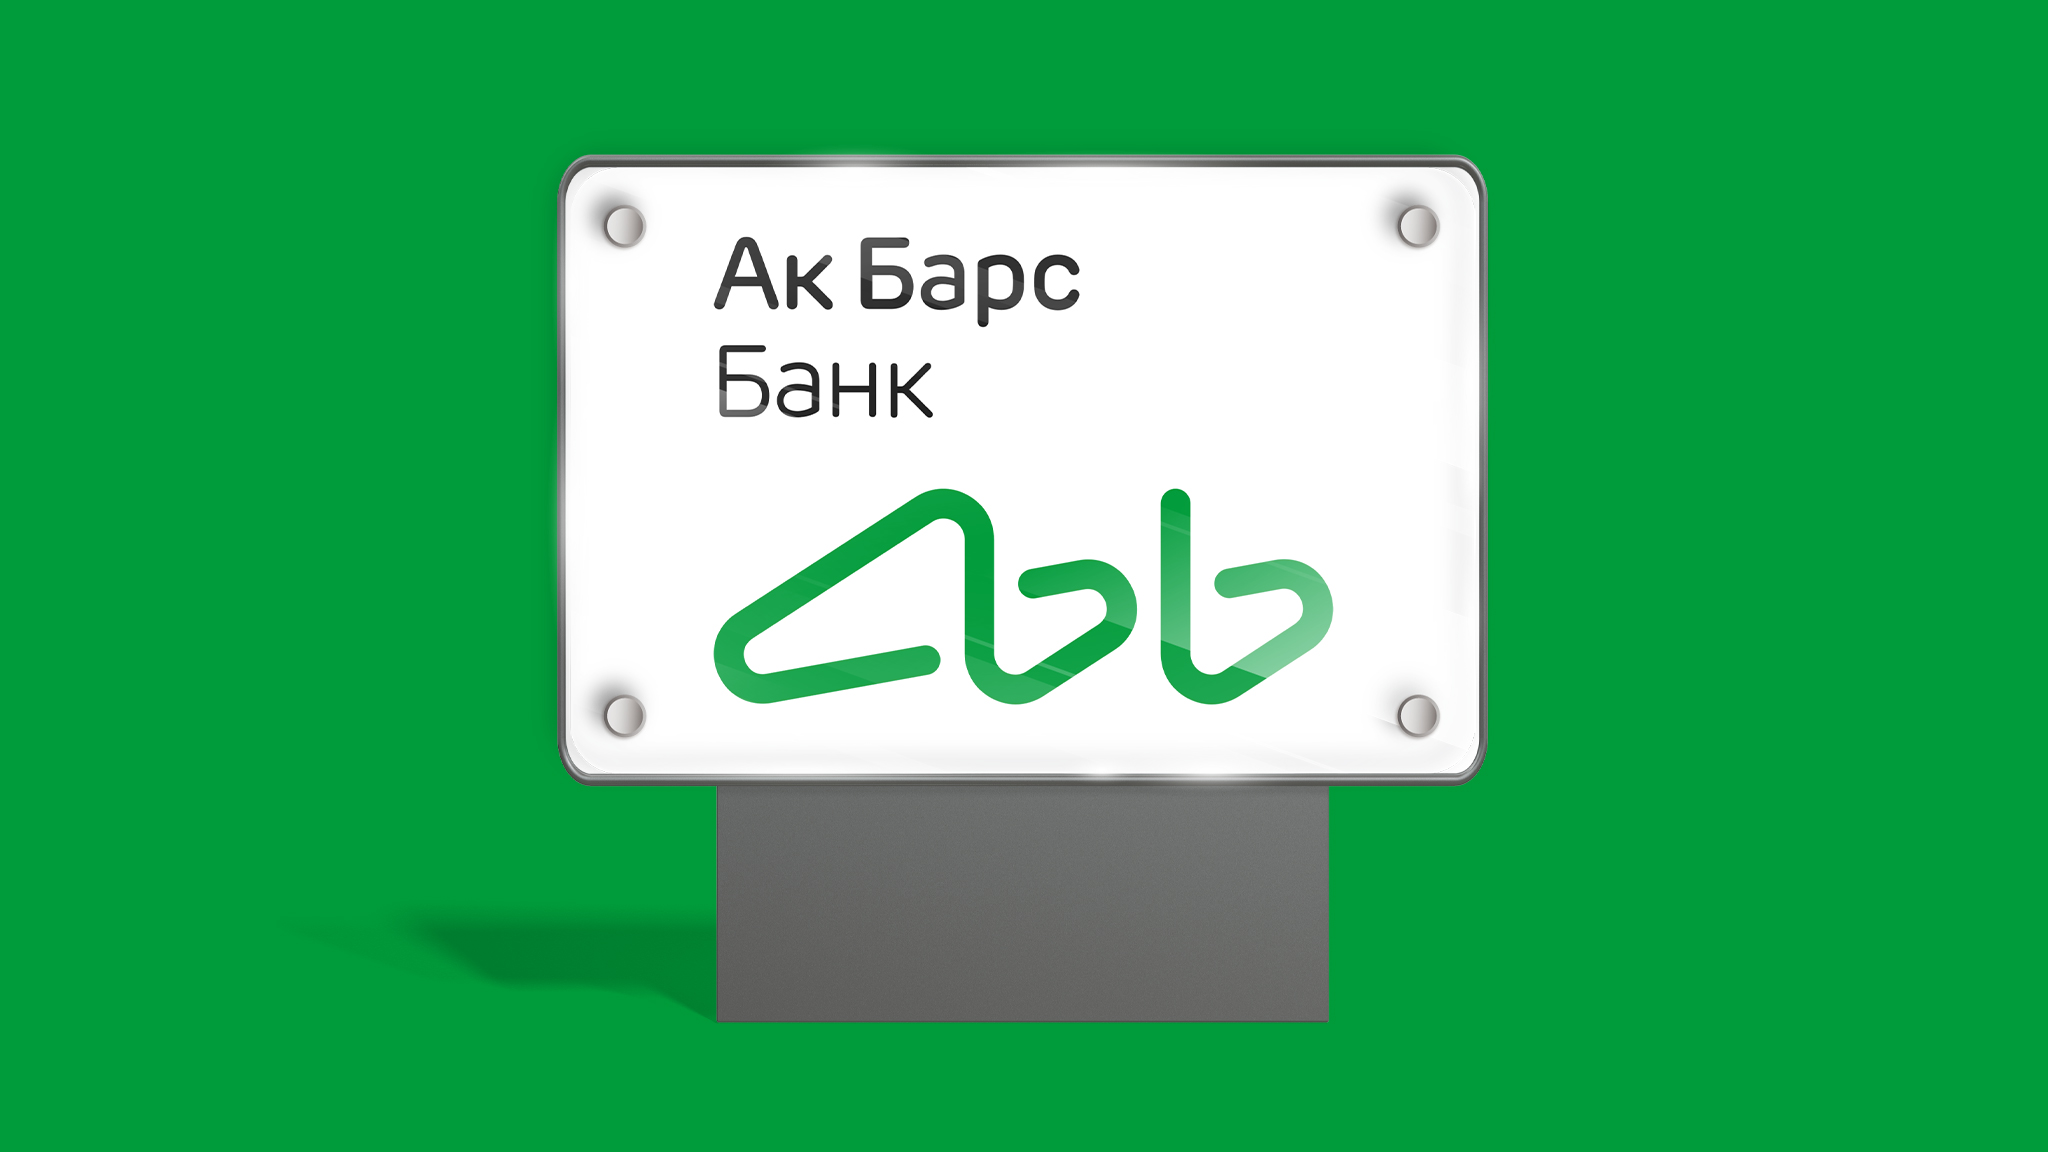 Акбарсбанк екатеринбург. АК Барс банк. АК Барс банк на белом фоне. АК Барс банк Ставрополь. АК Барс банк логотип на белом фоне.